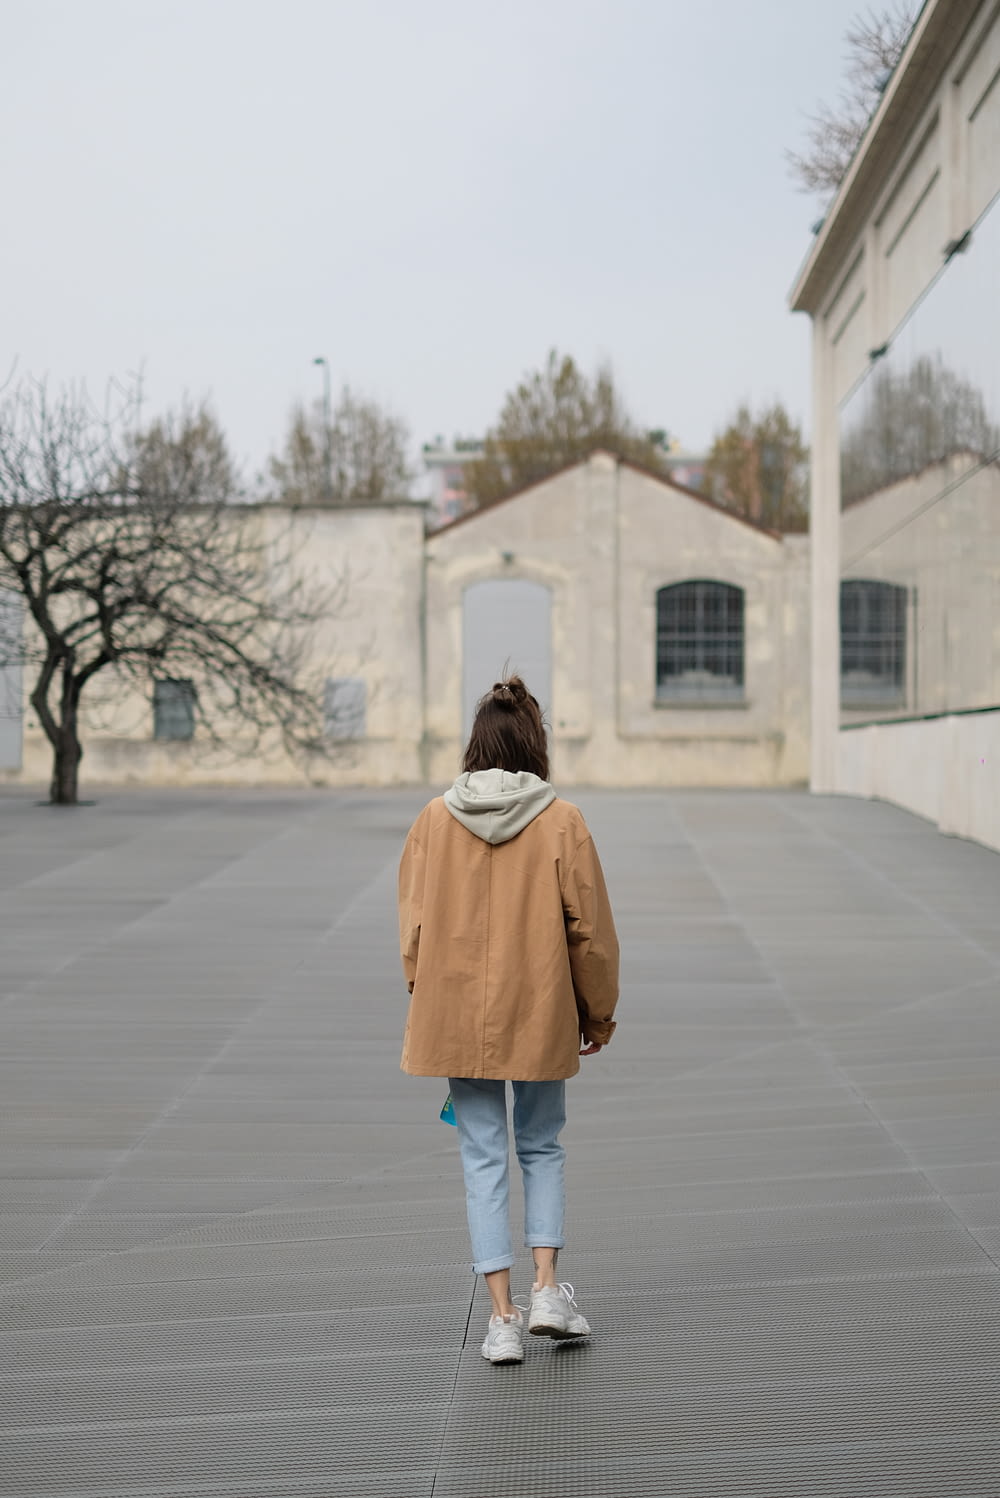 a woman in a brown jacket is walking